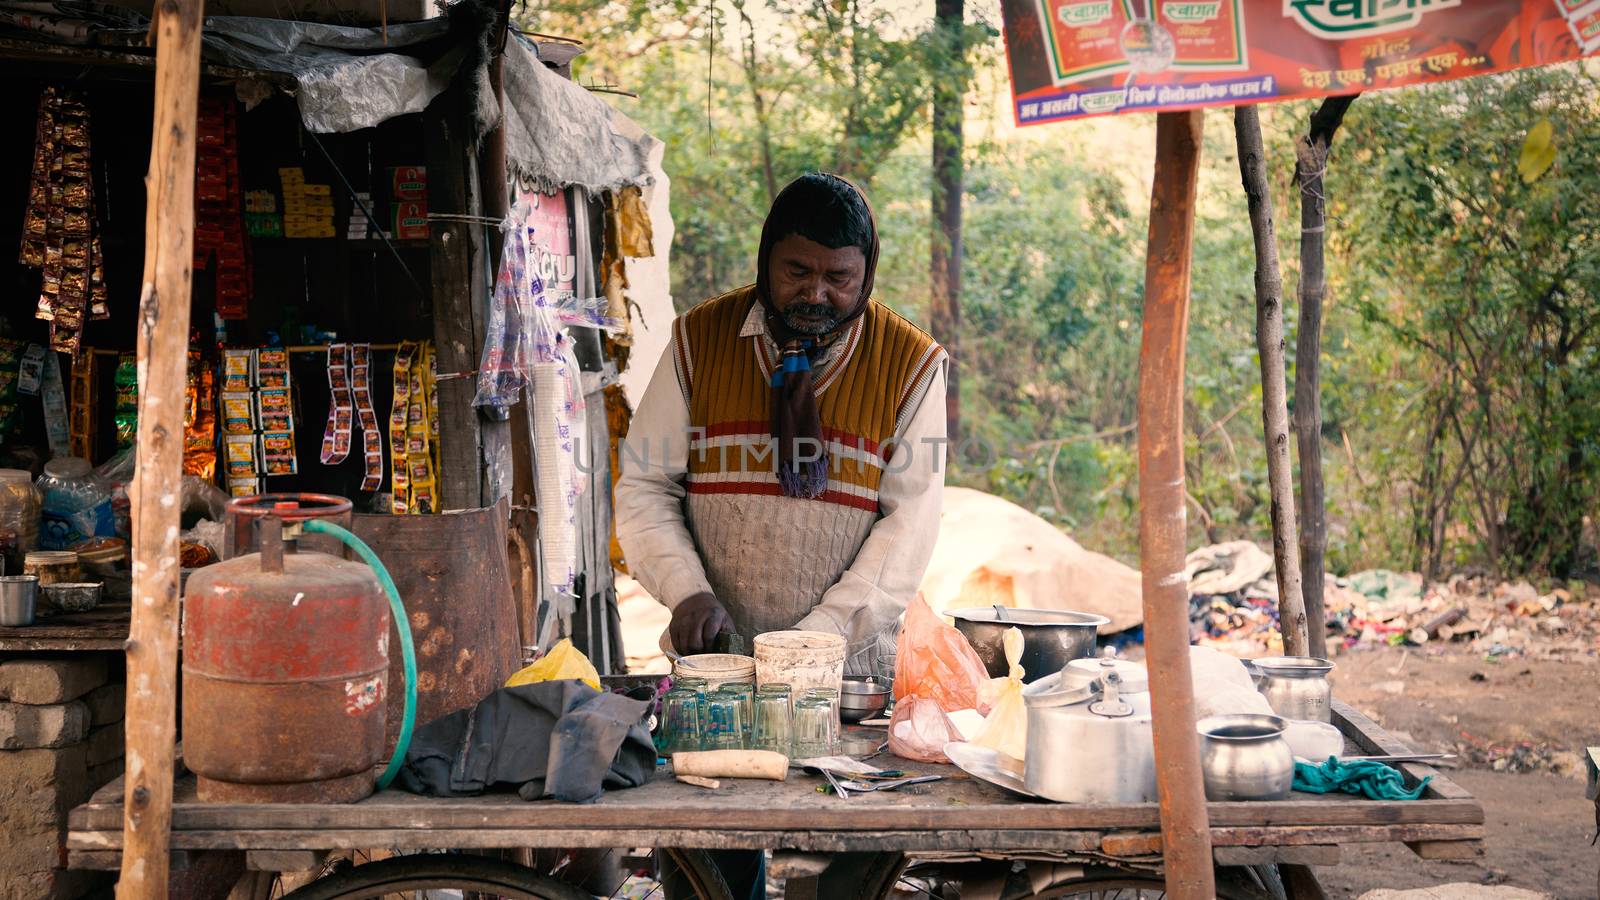 A Local street tea vendor preparing tea. by ziprashantzi